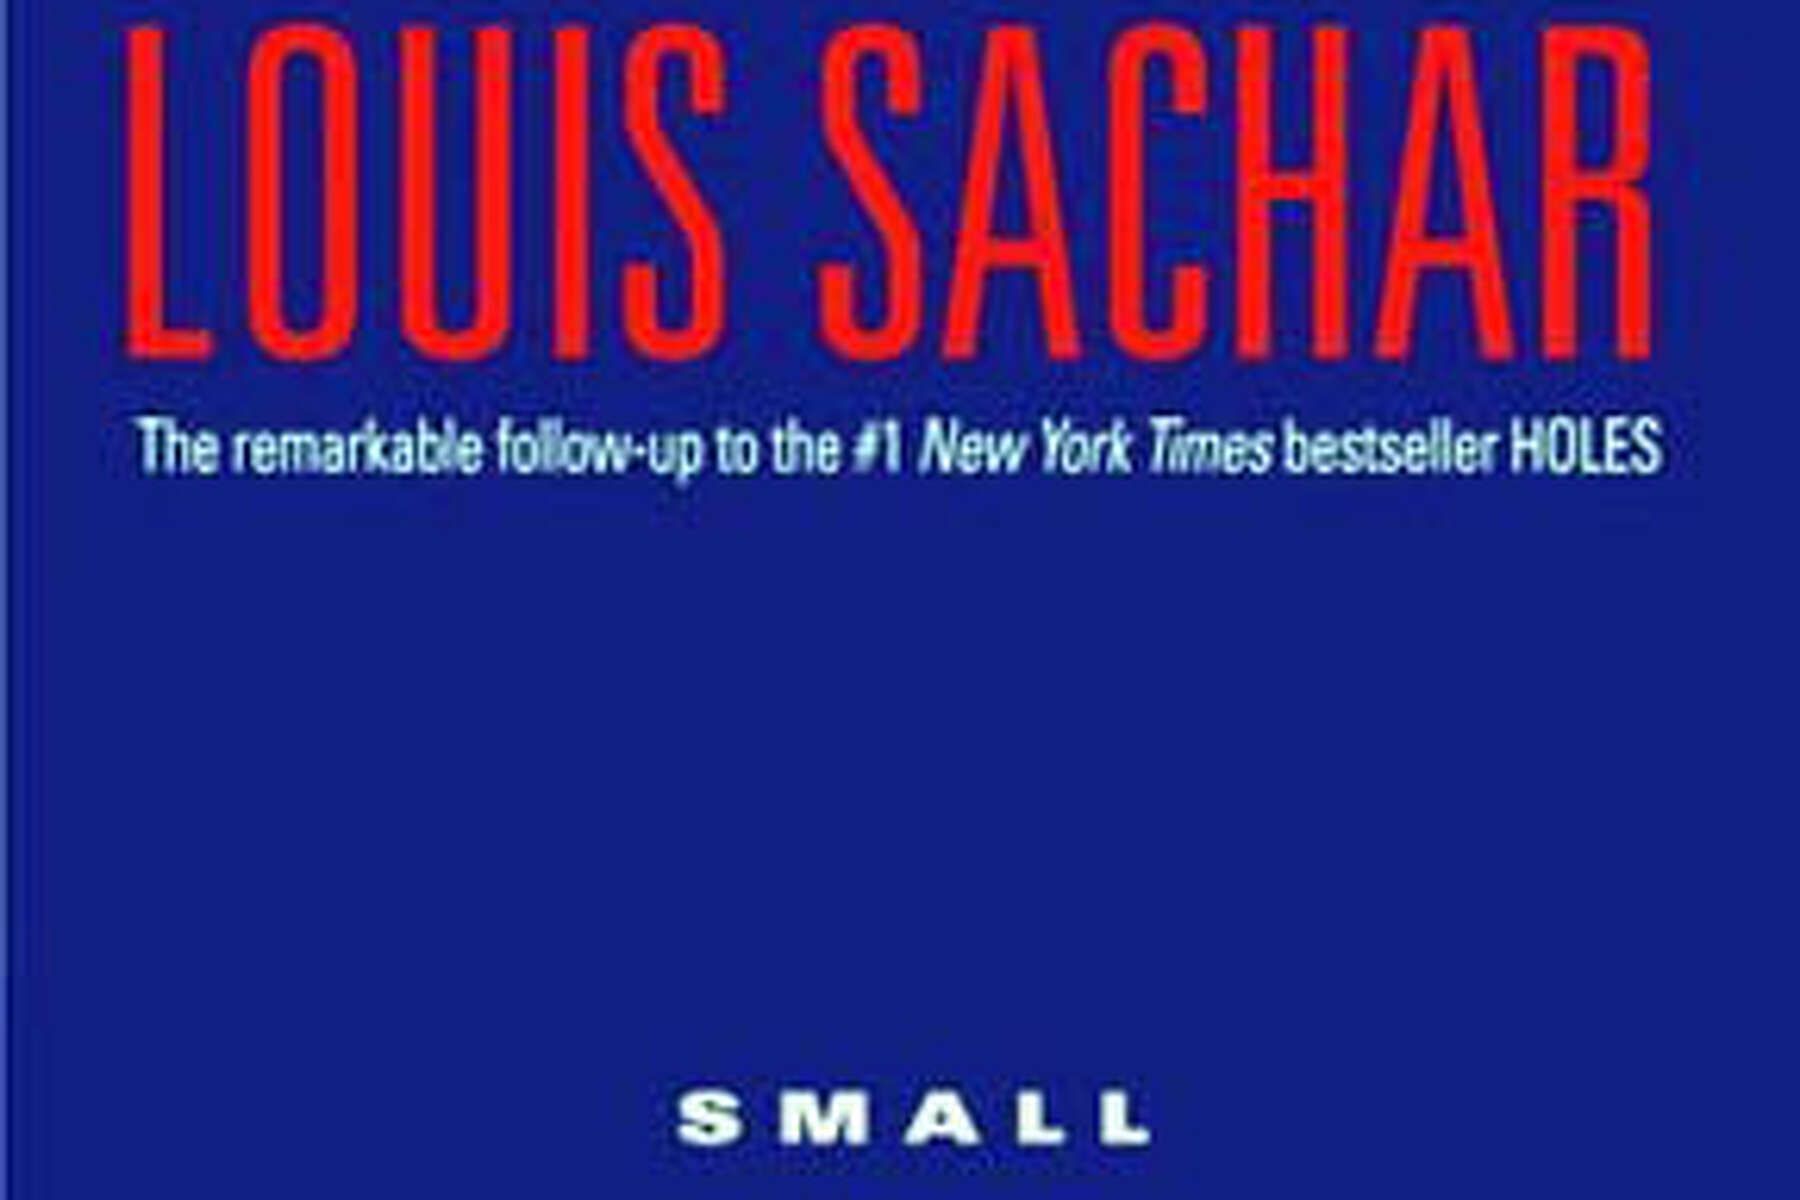 Small Steps, Louis Sachar